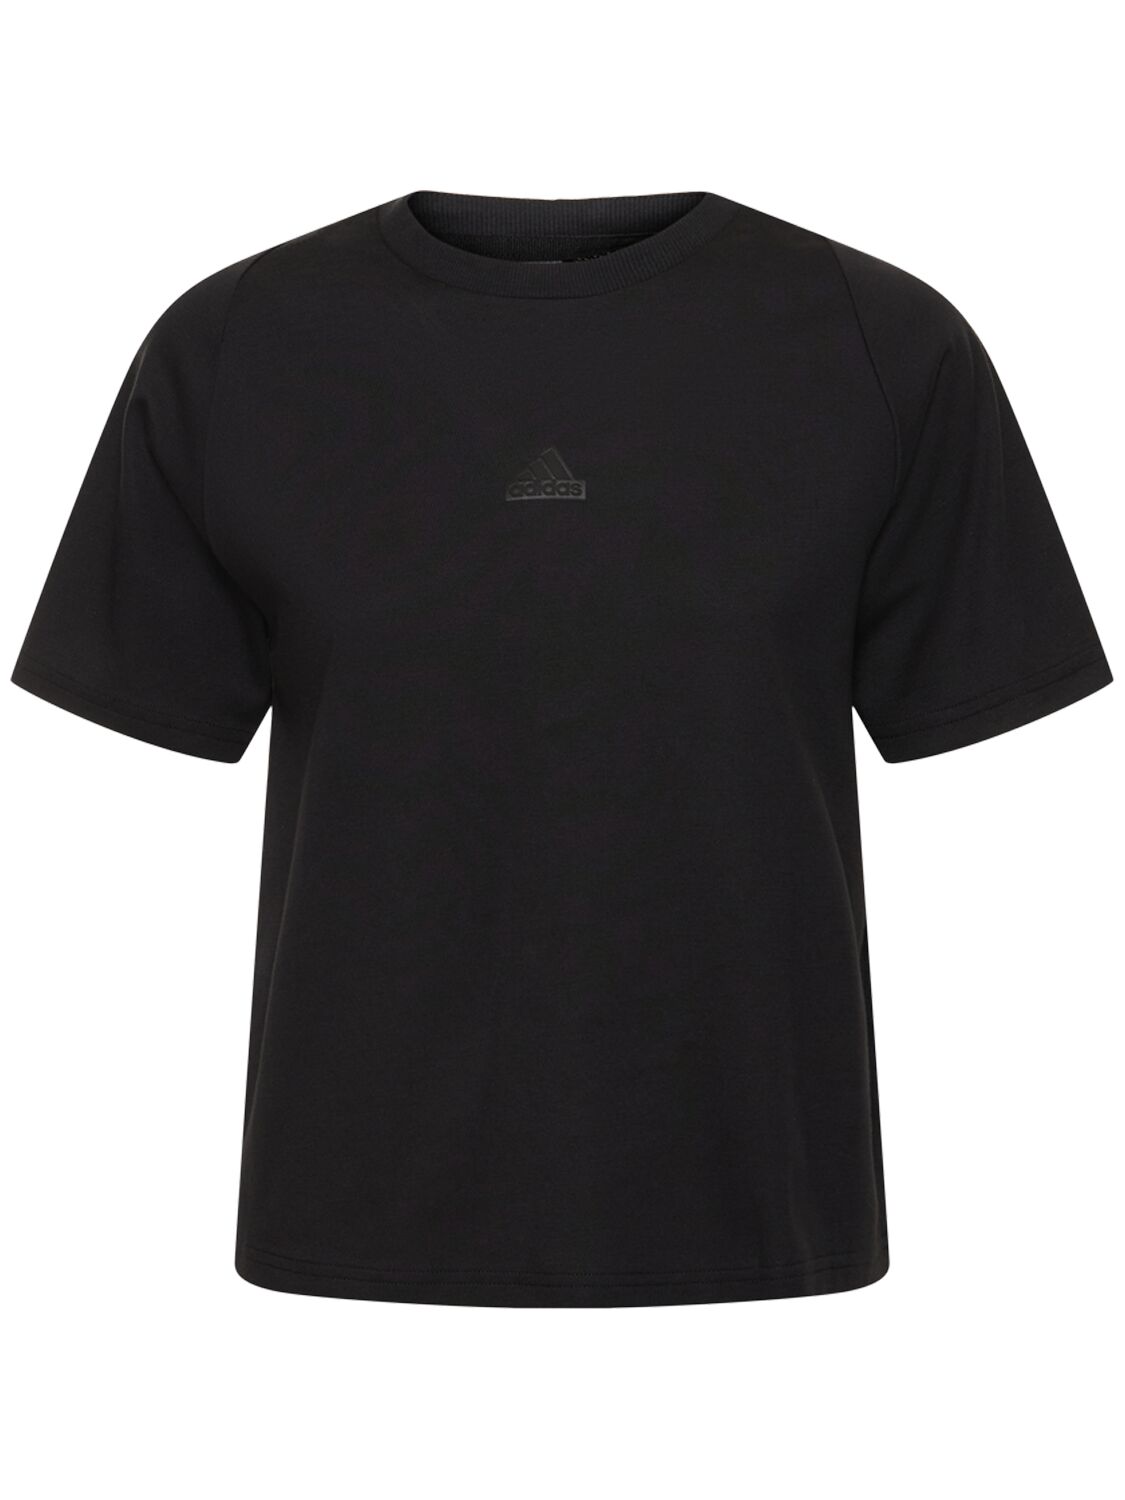 Adidas Originals Zone T-shirt In Black